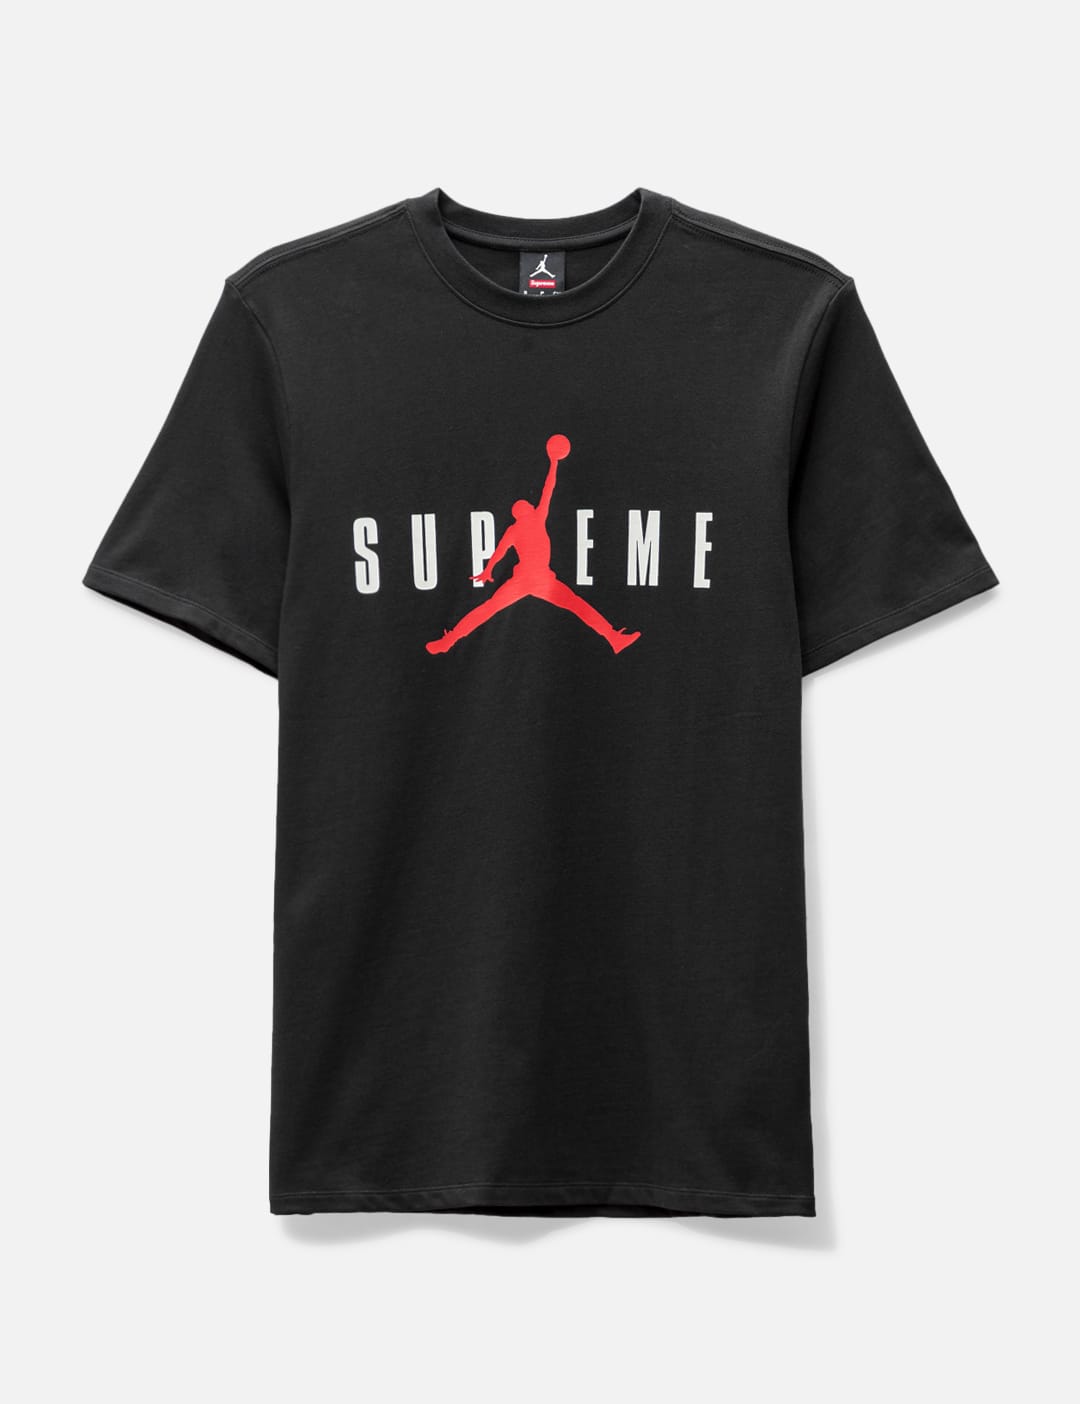 Jordan Brand - Supreme X Jordan Tee | HBX - Globally Curated